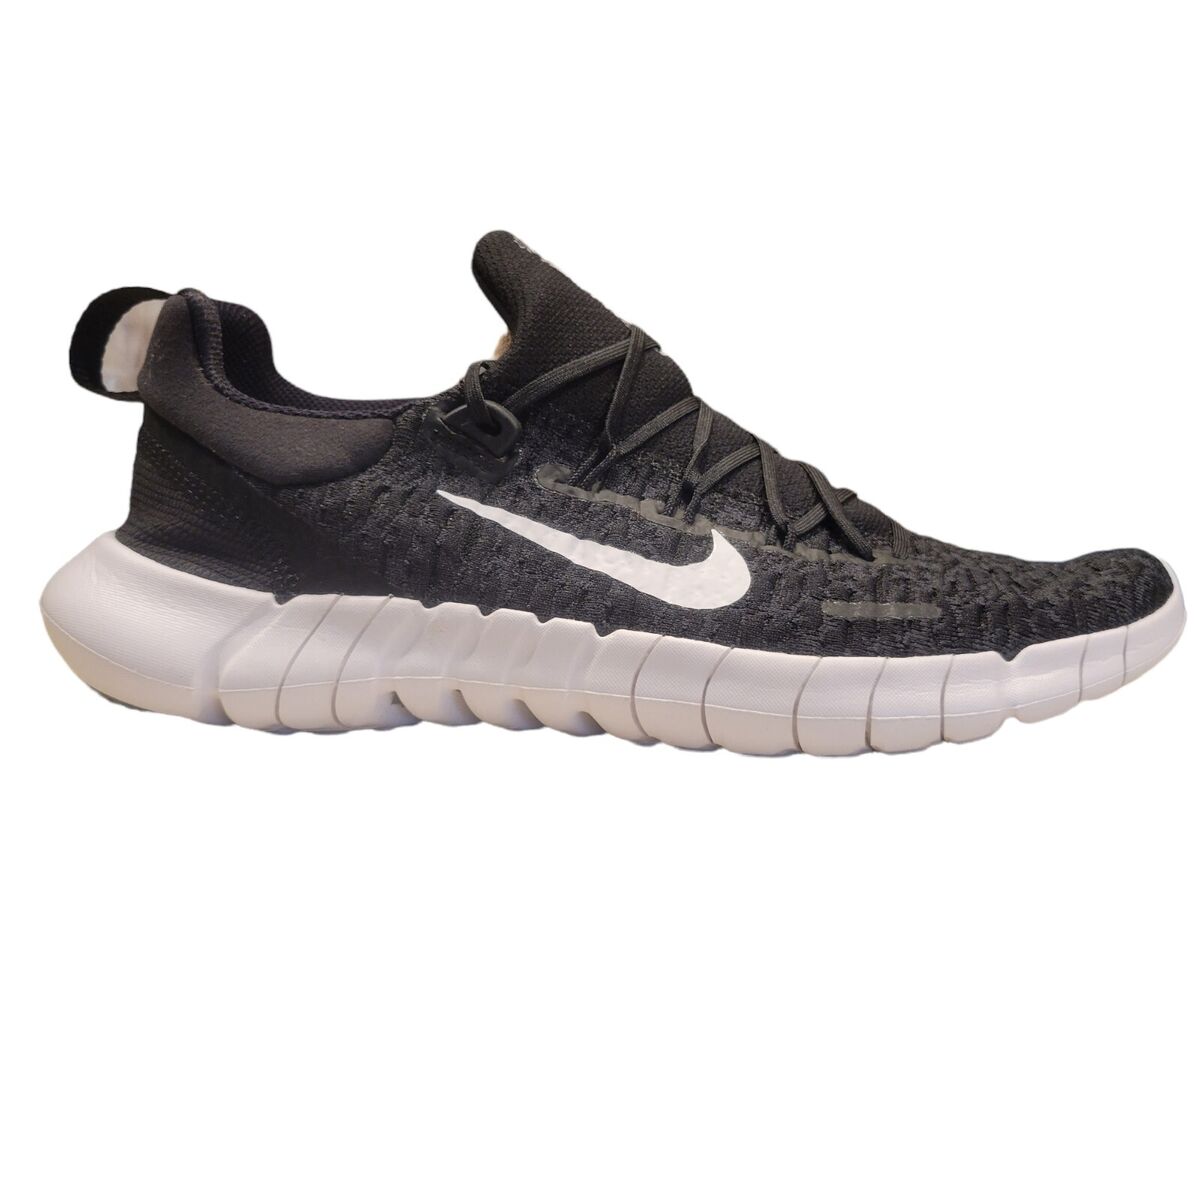 Nike Free Run Running Shoe Black/White Men's 11 New CZ1884 001 | eBay